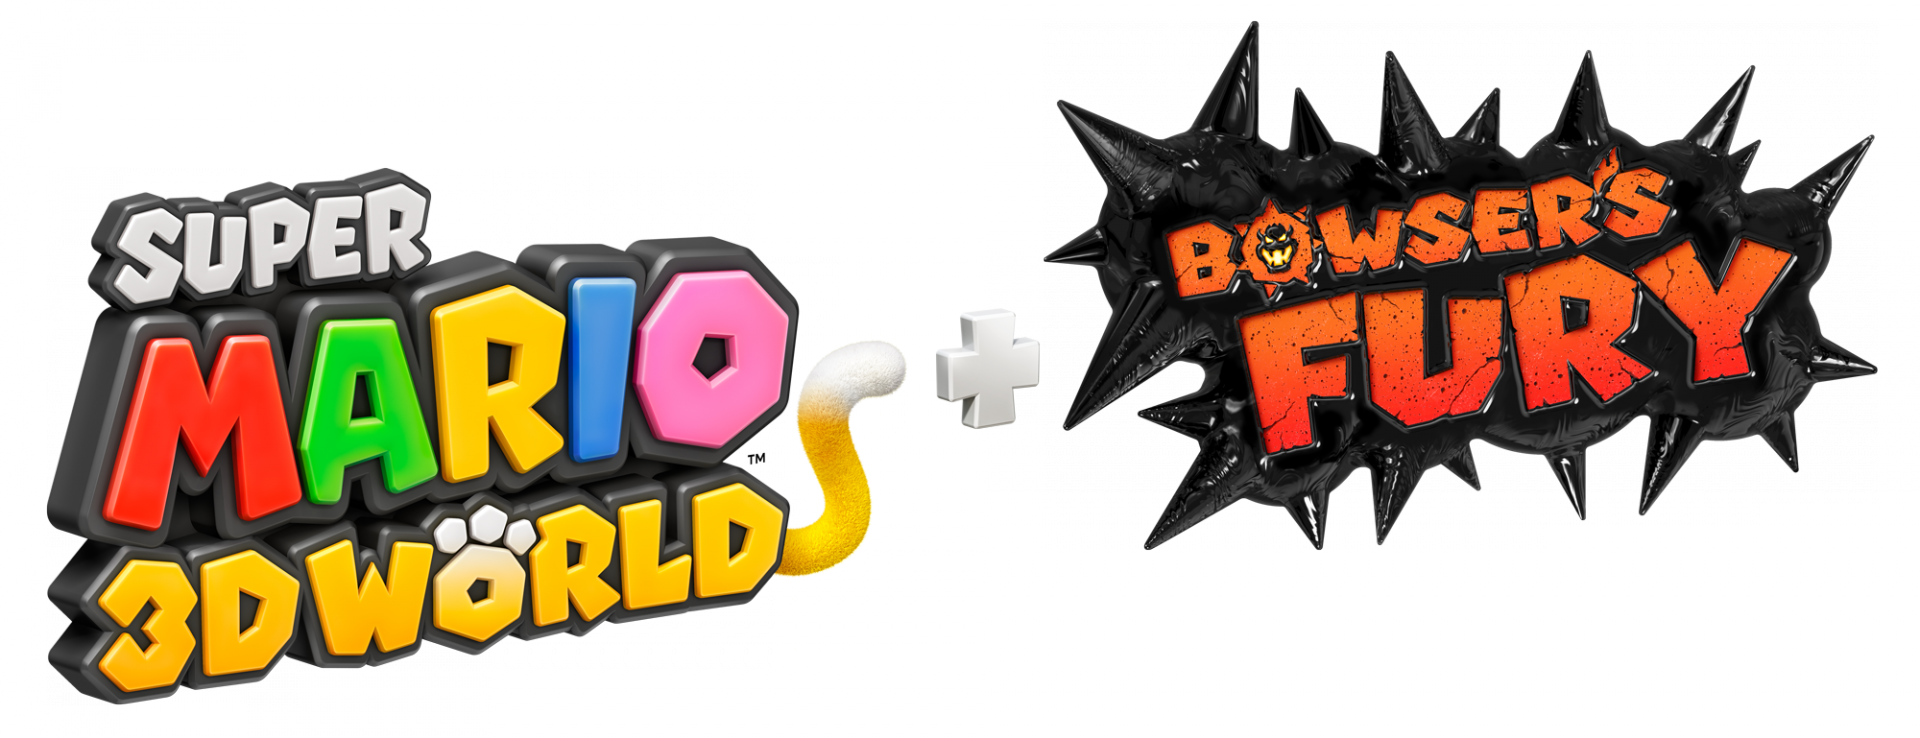 Super mario fury. Super Mario 3d World + Bowser's Fury. Марио Bowser Fury. Игра super Mario 3d World Bowser's Fury Switch. Super Mario 3d World Bowser's Fury картридж.